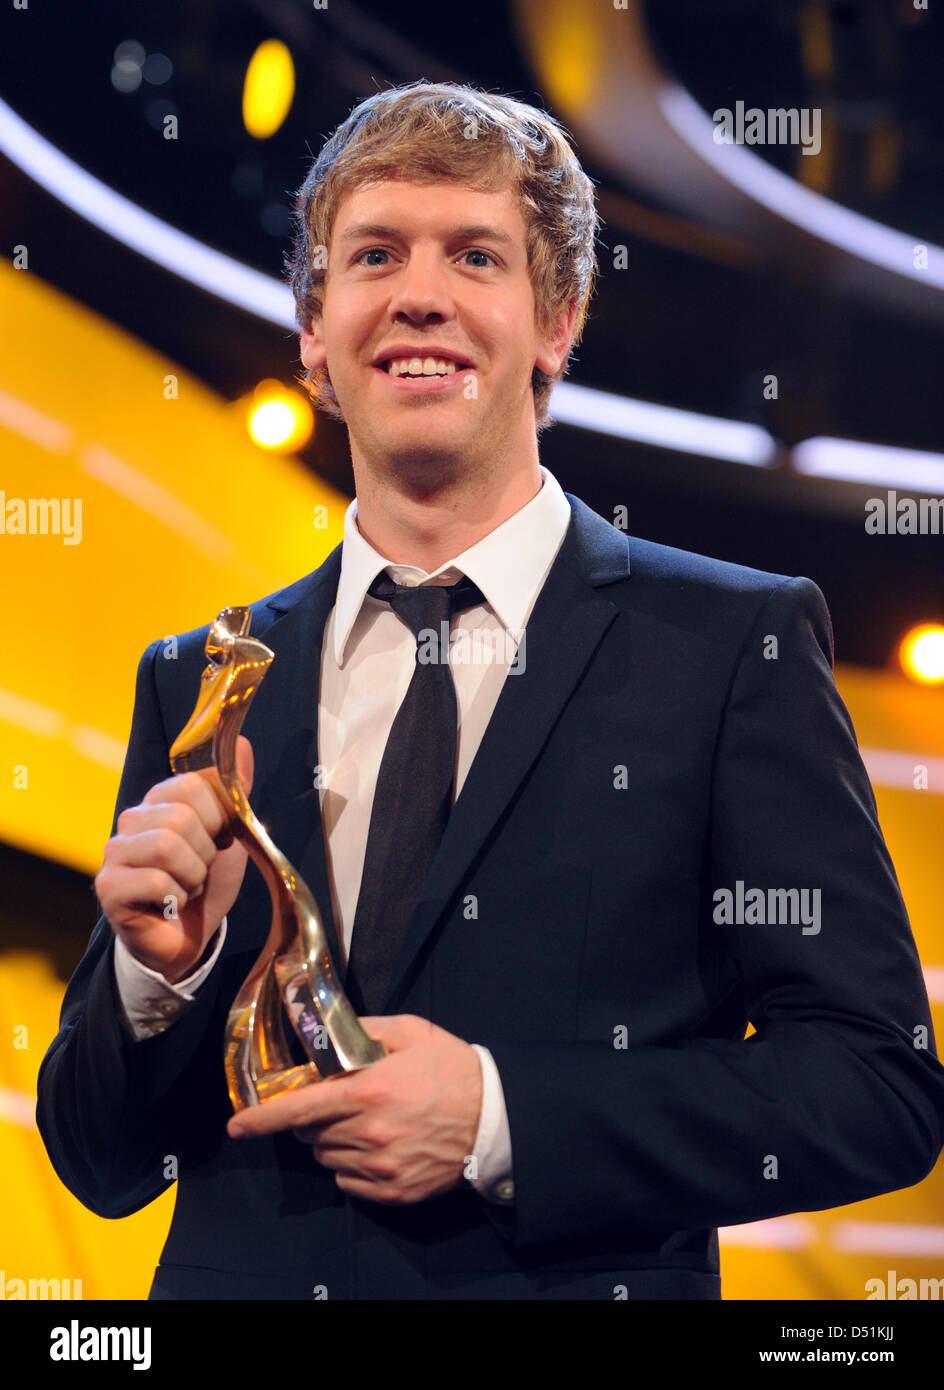 Formula 1  Vettel keener on trophies than money